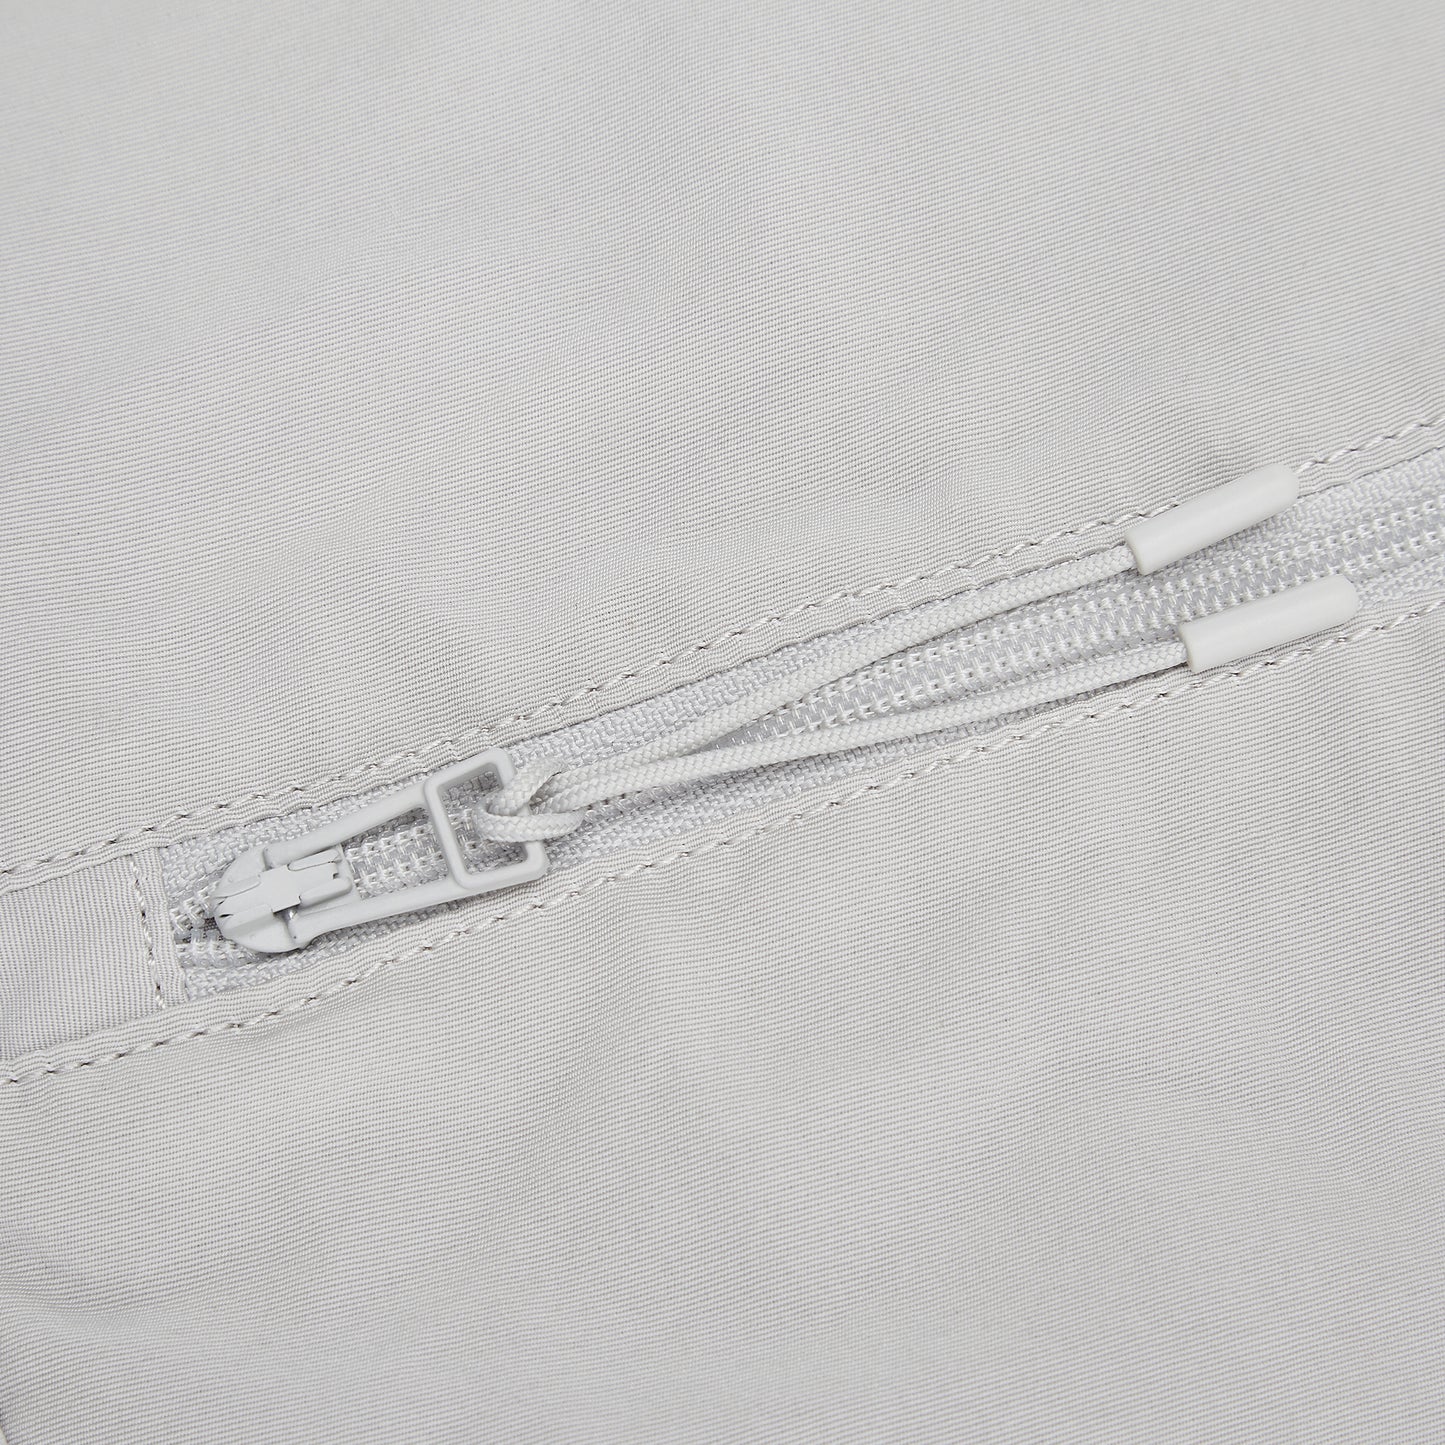 zip detail on grey bag